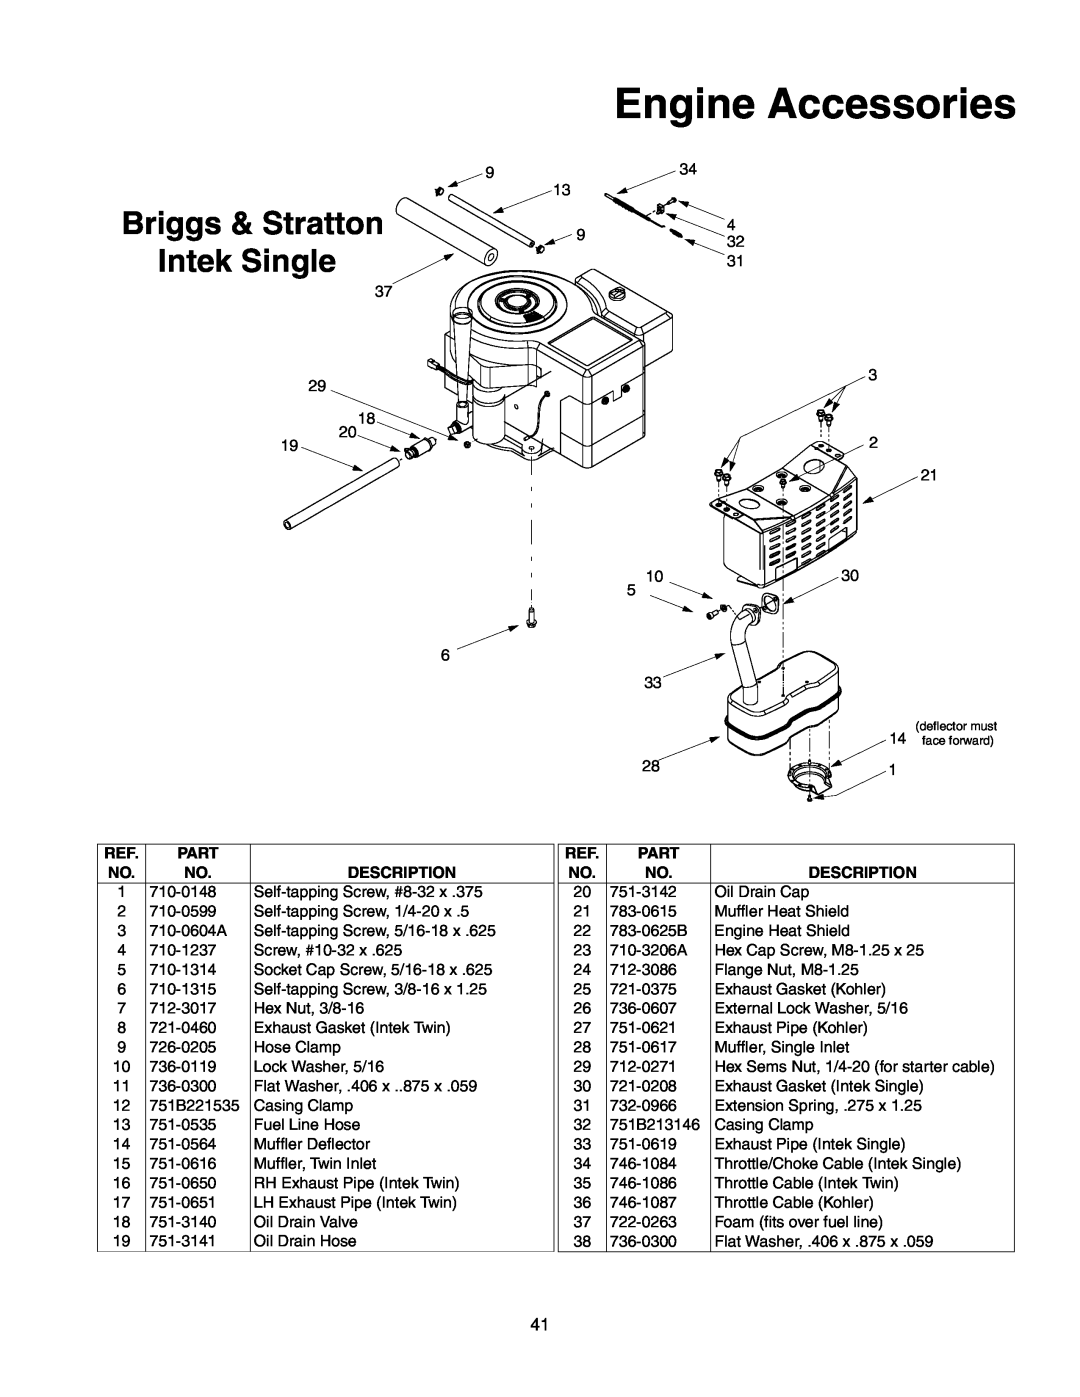 MTD 604 manual Engine Accessories, Briggs & Stratton Intek Single 